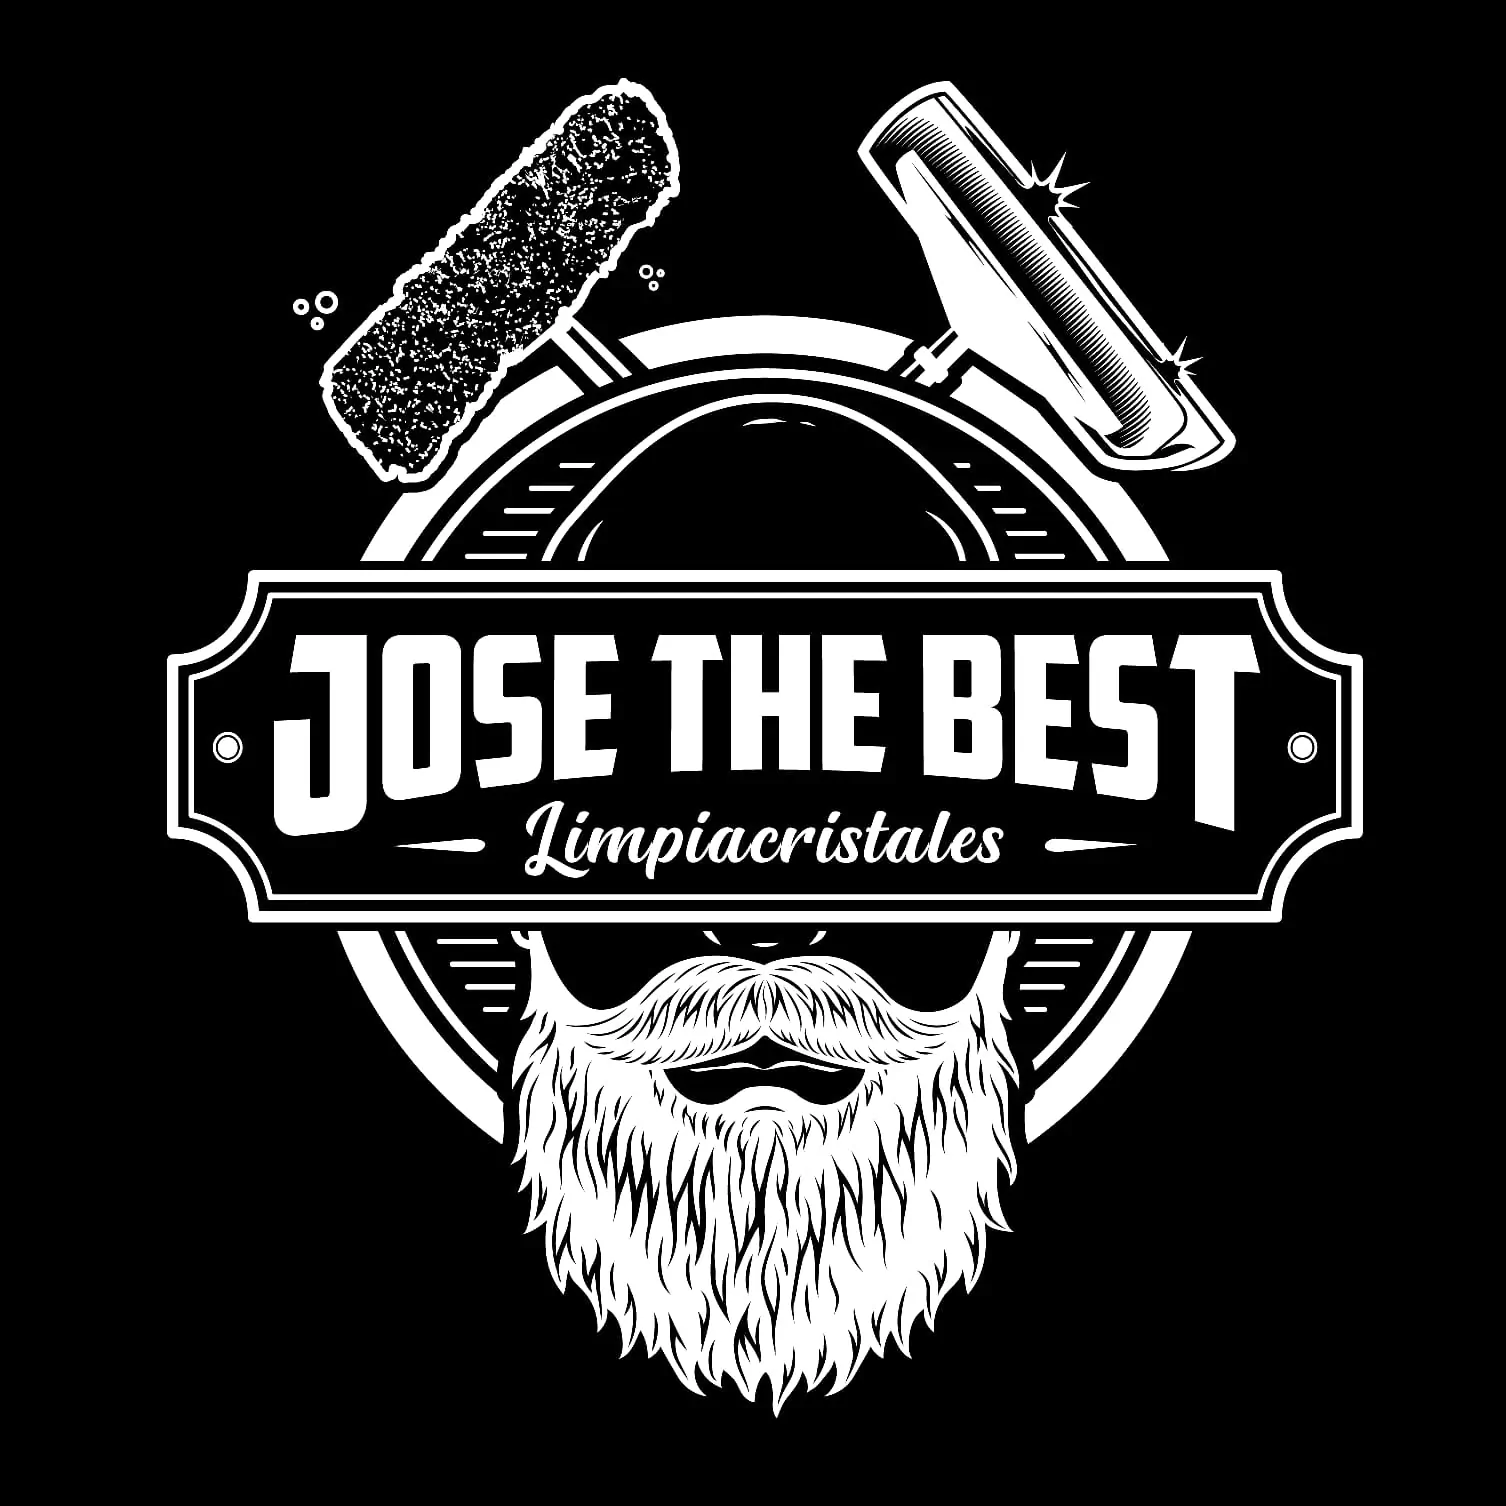 Jose The Best - El mejor limpiacristales del mundo